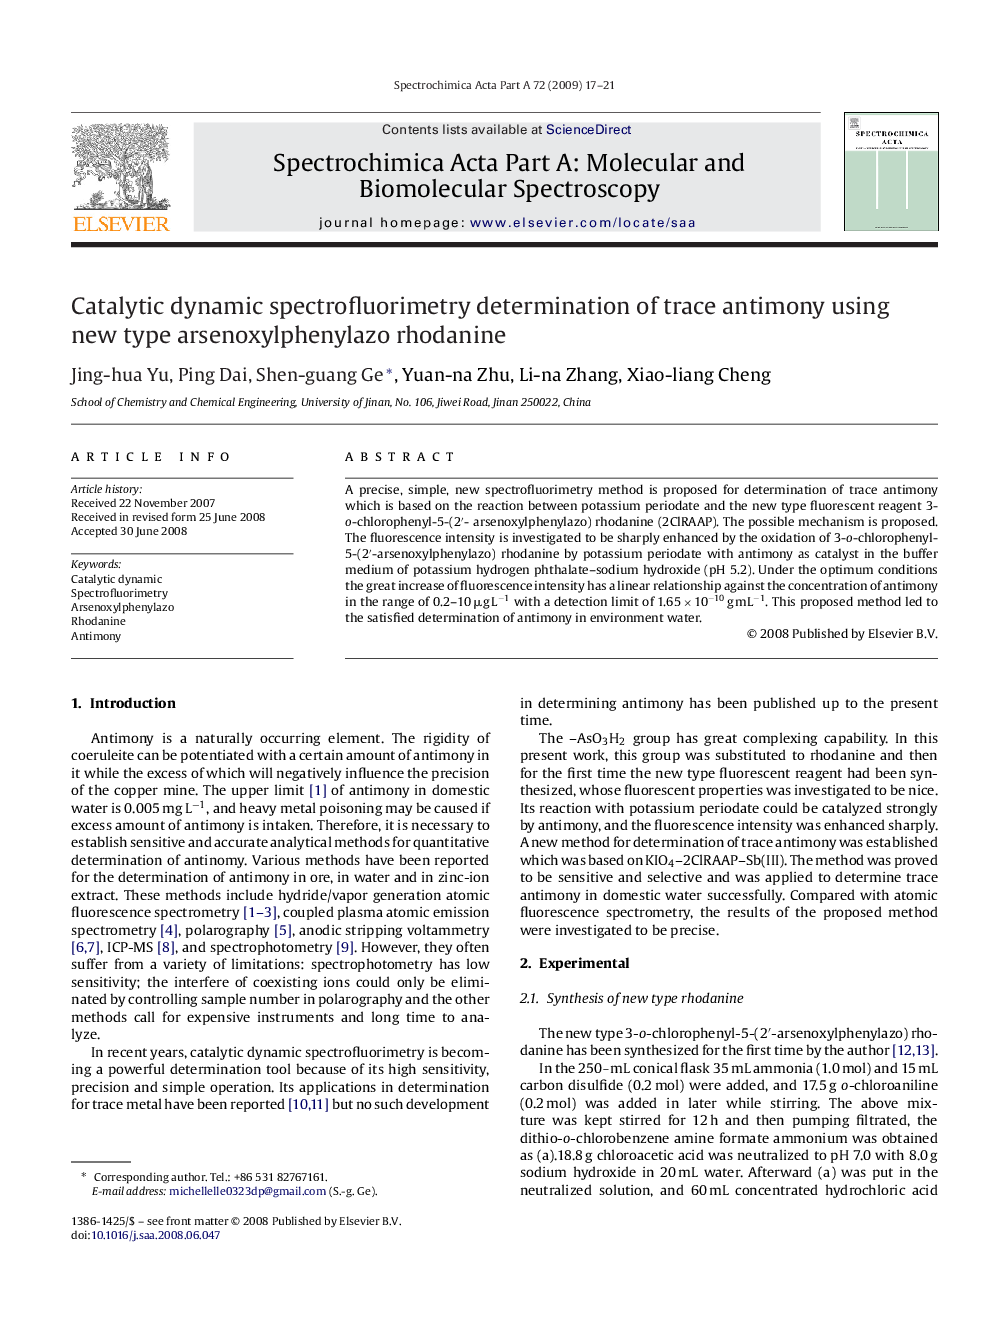 Catalytic dynamic spectrofluorimetry determination of trace antimony using new type arsenoxylphenylazo rhodanine